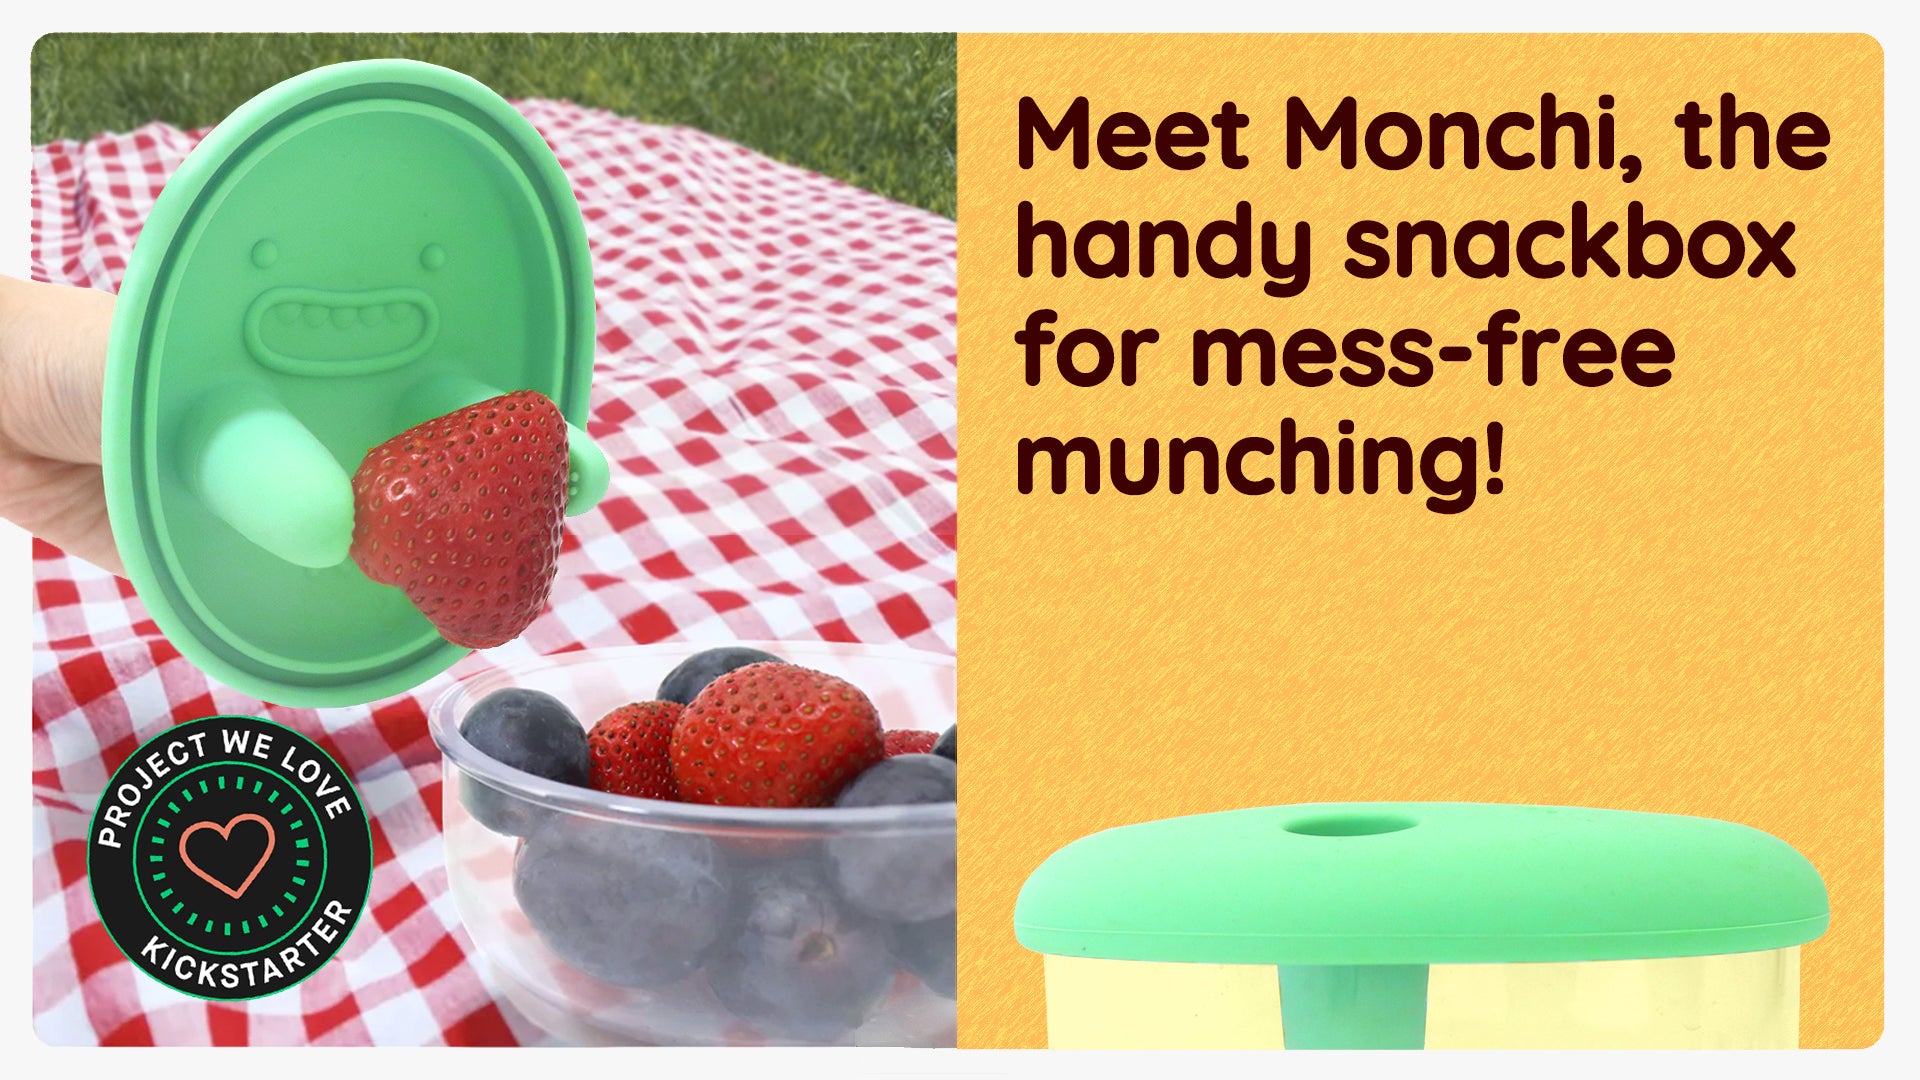 Monchi: A handy snackbox for mess-free munching! by Monchi